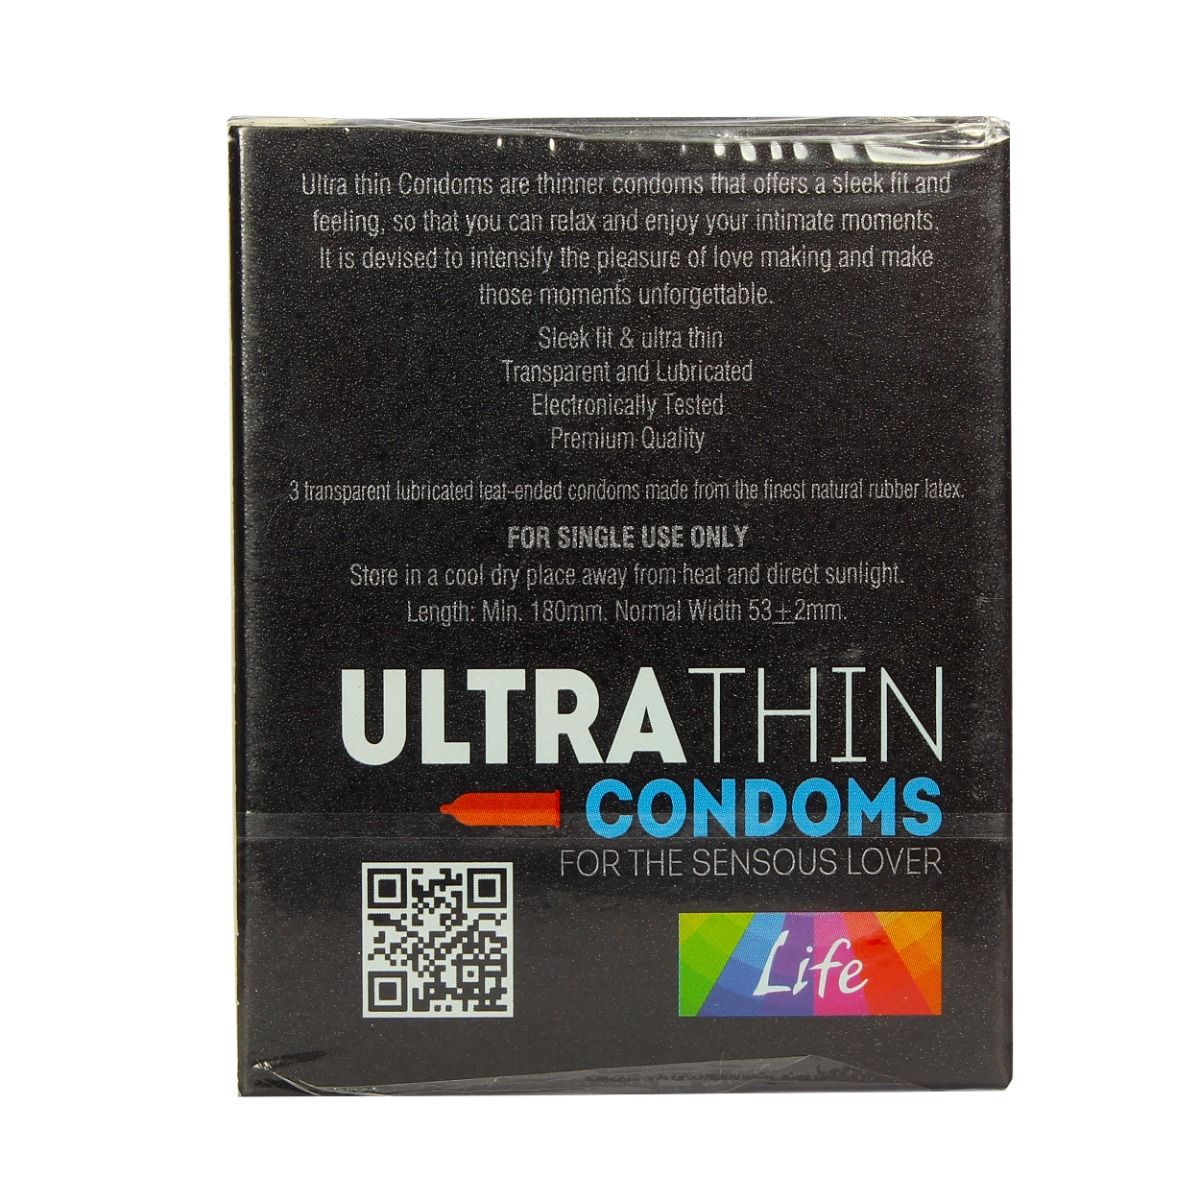 Apollo Life Ultrathin Condoms, 3 Count, Pack of 1 